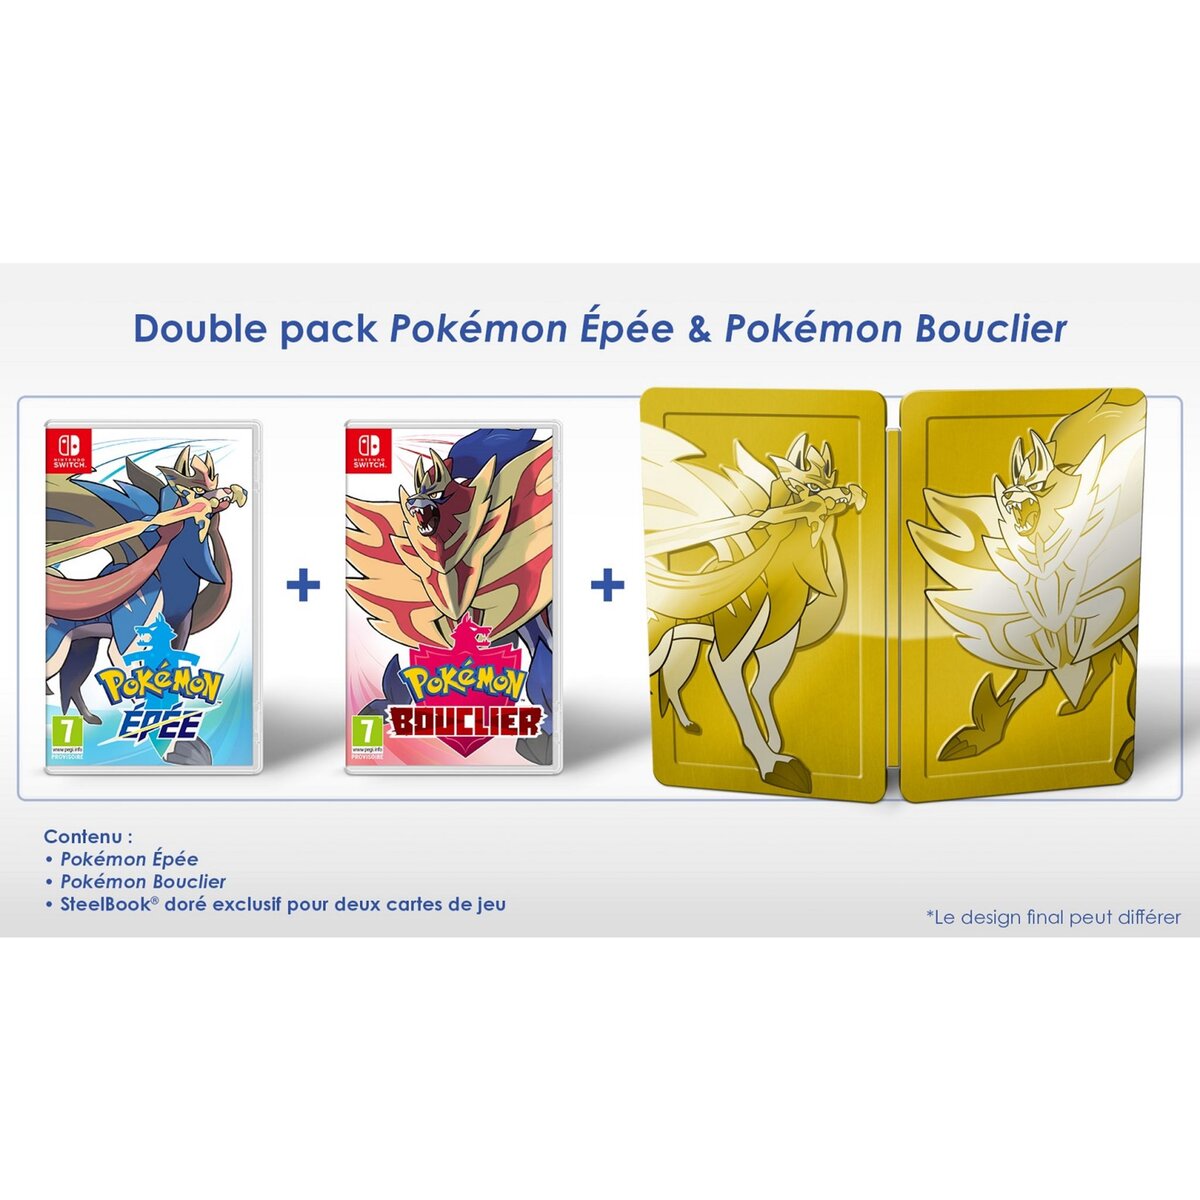 Pokémon Épée + Pokémon Bouclier double pack